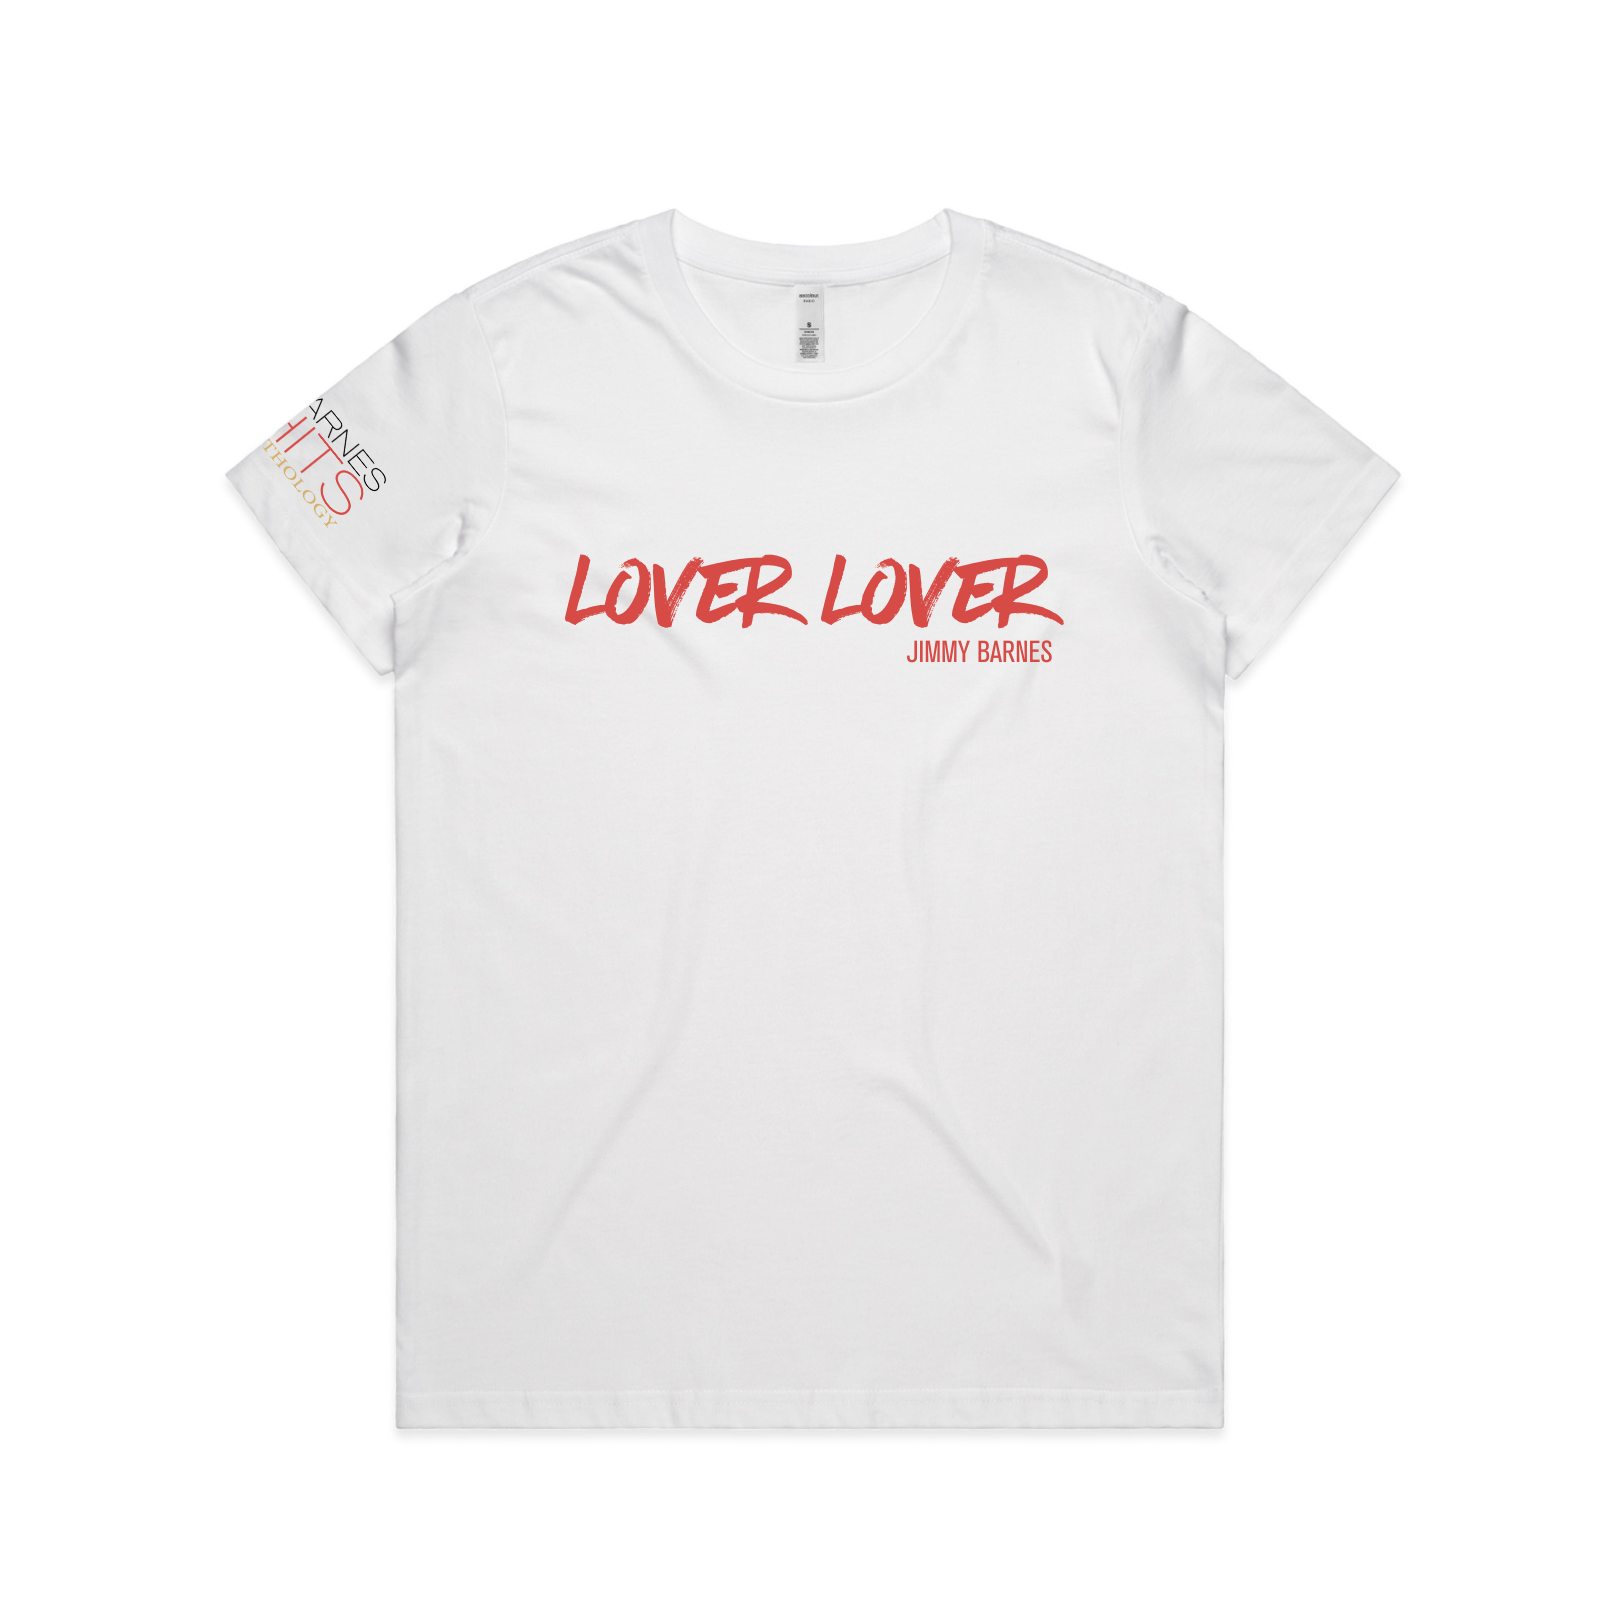 Lover Lover Jimmy Barnes | Womens T shirt